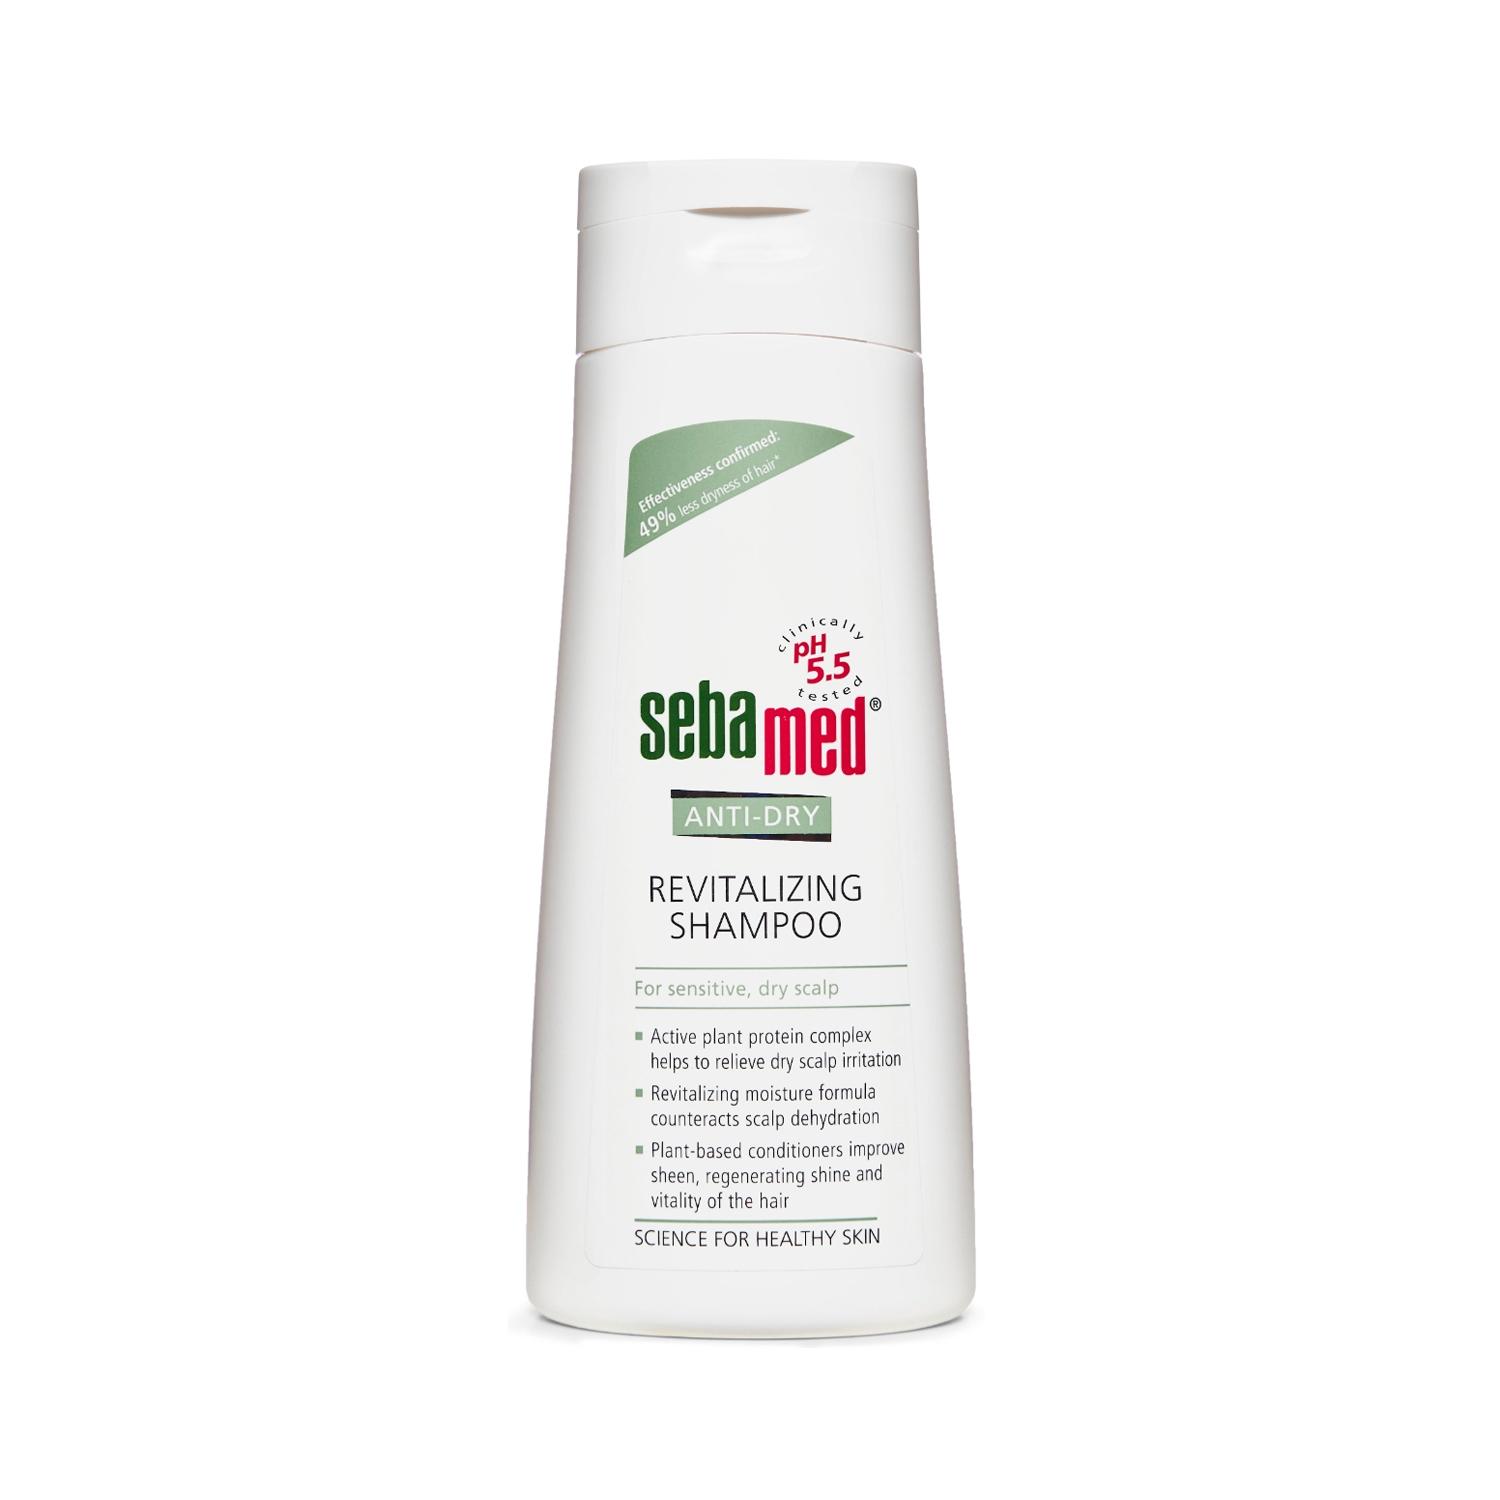 Sebamed Anti Dry Revitalizing Shampoo (200ml)